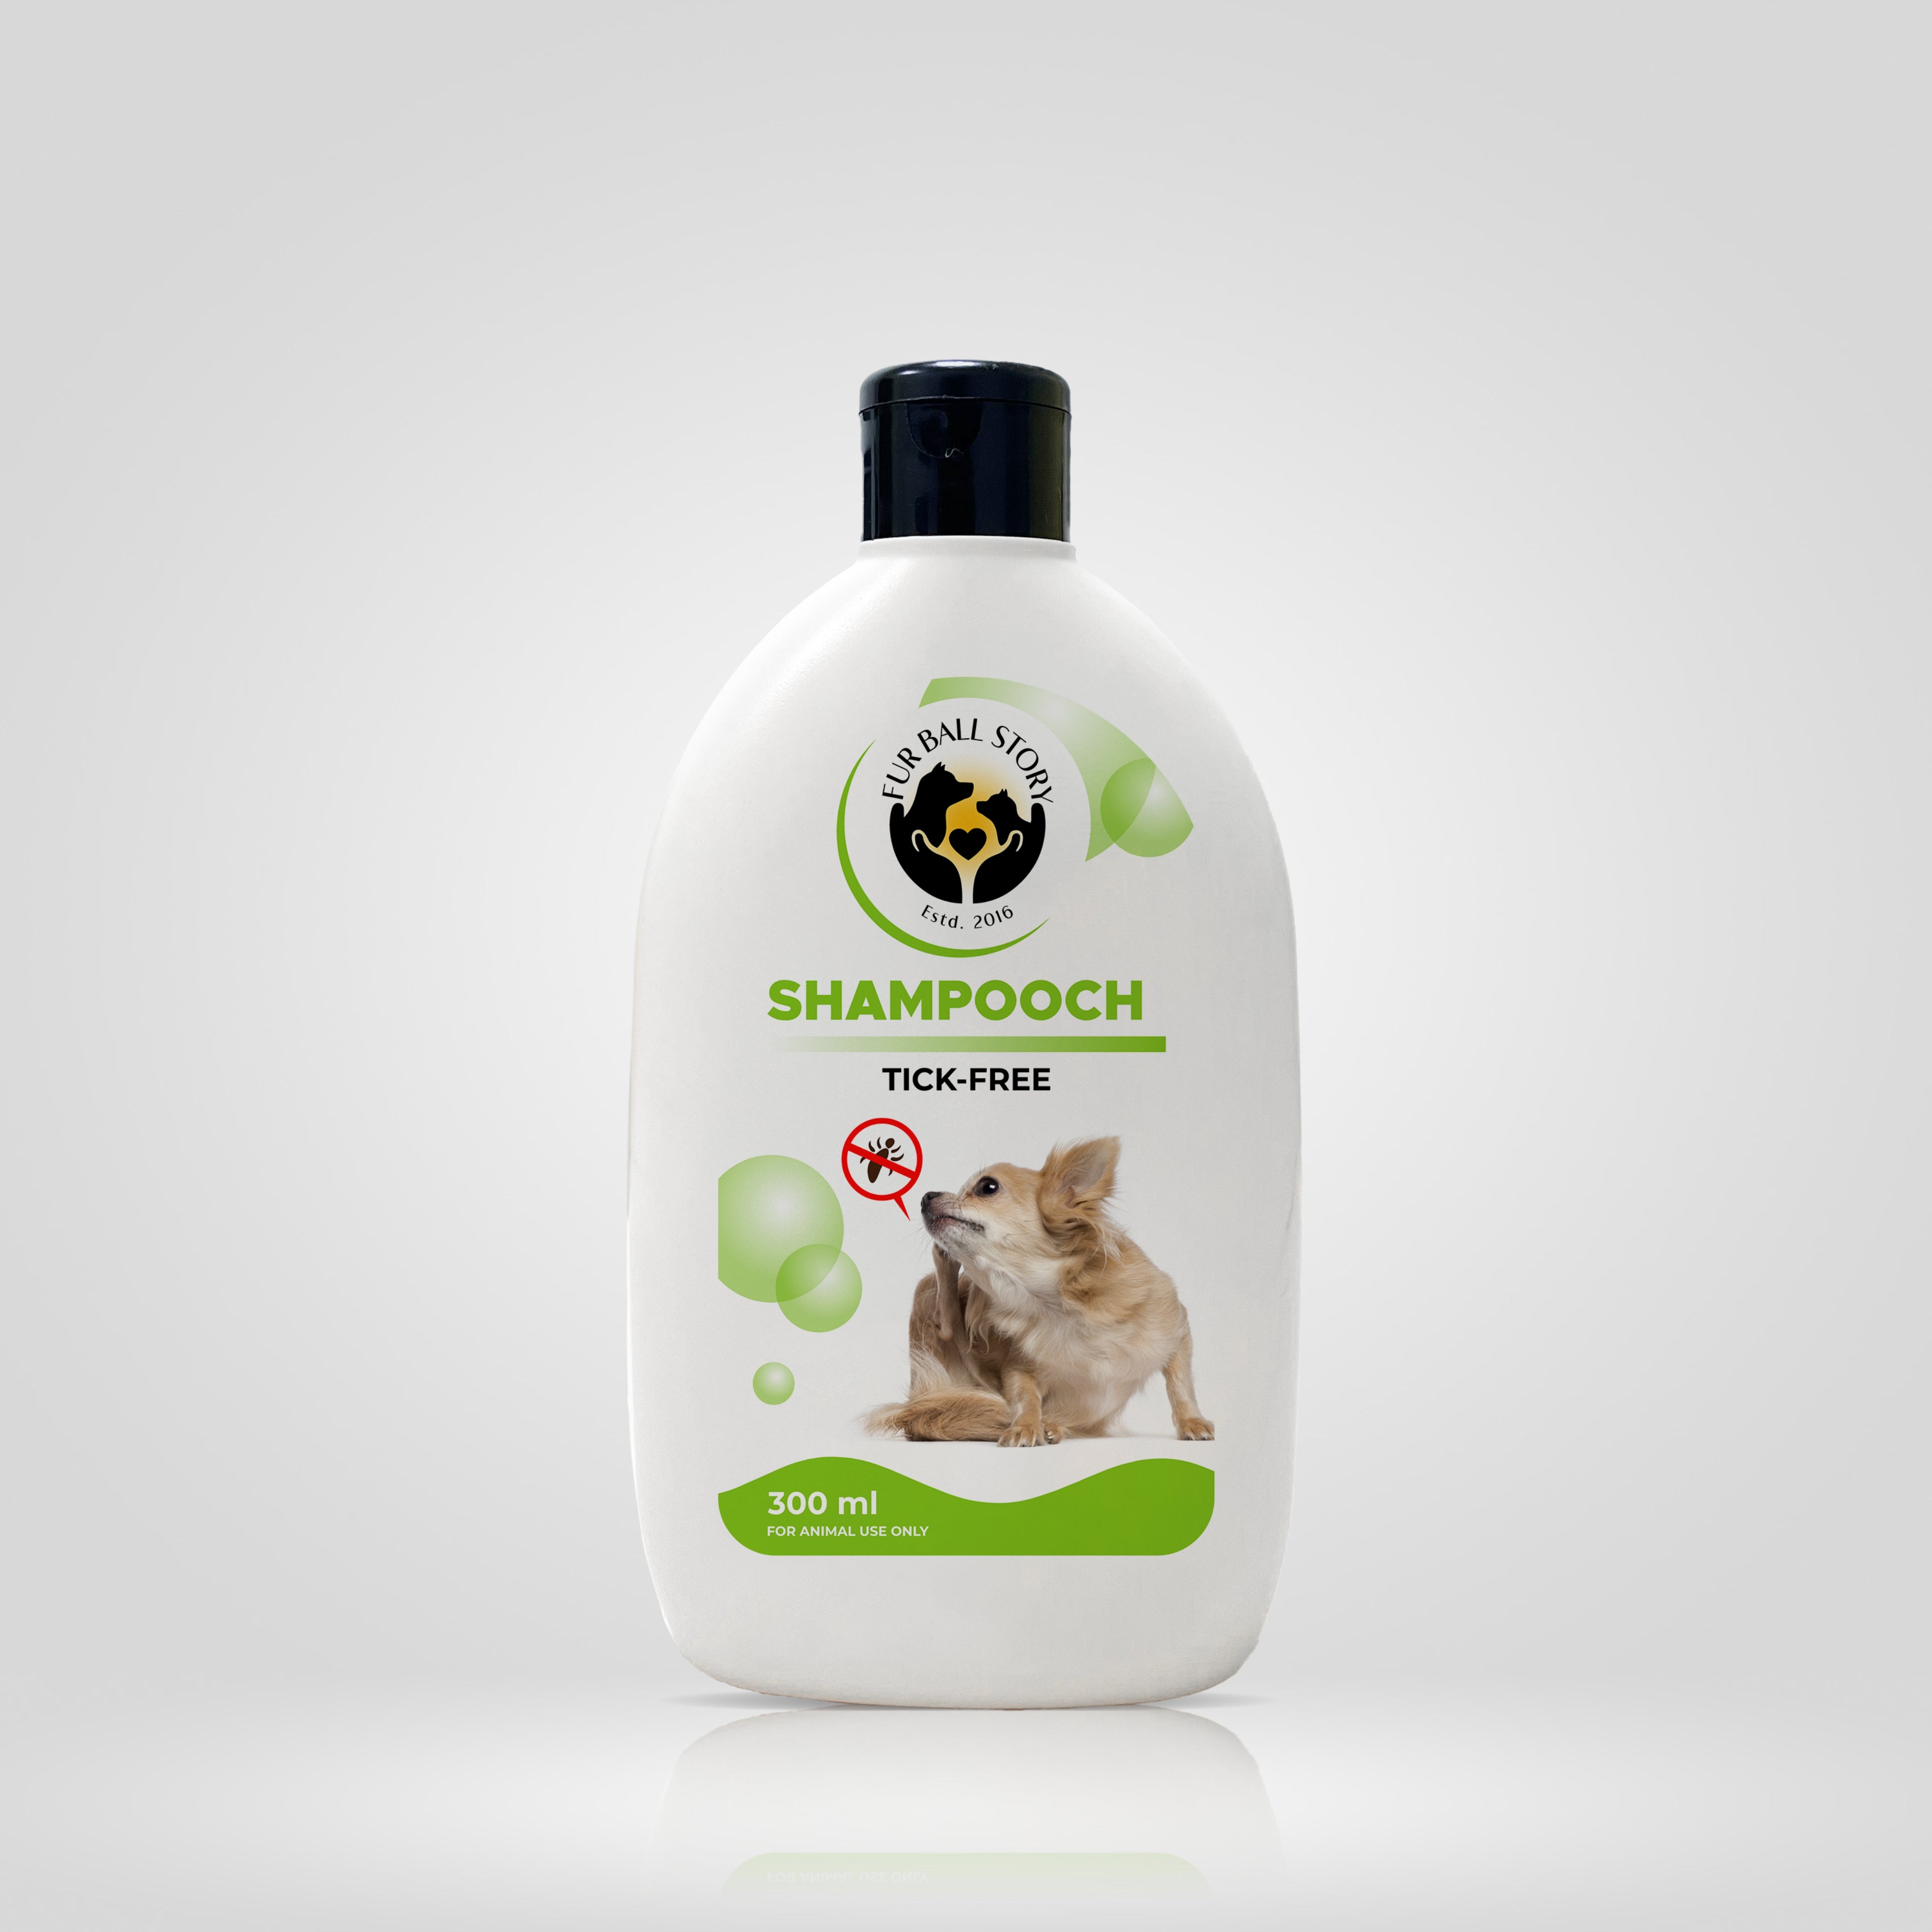 Tick shampoo for dogs